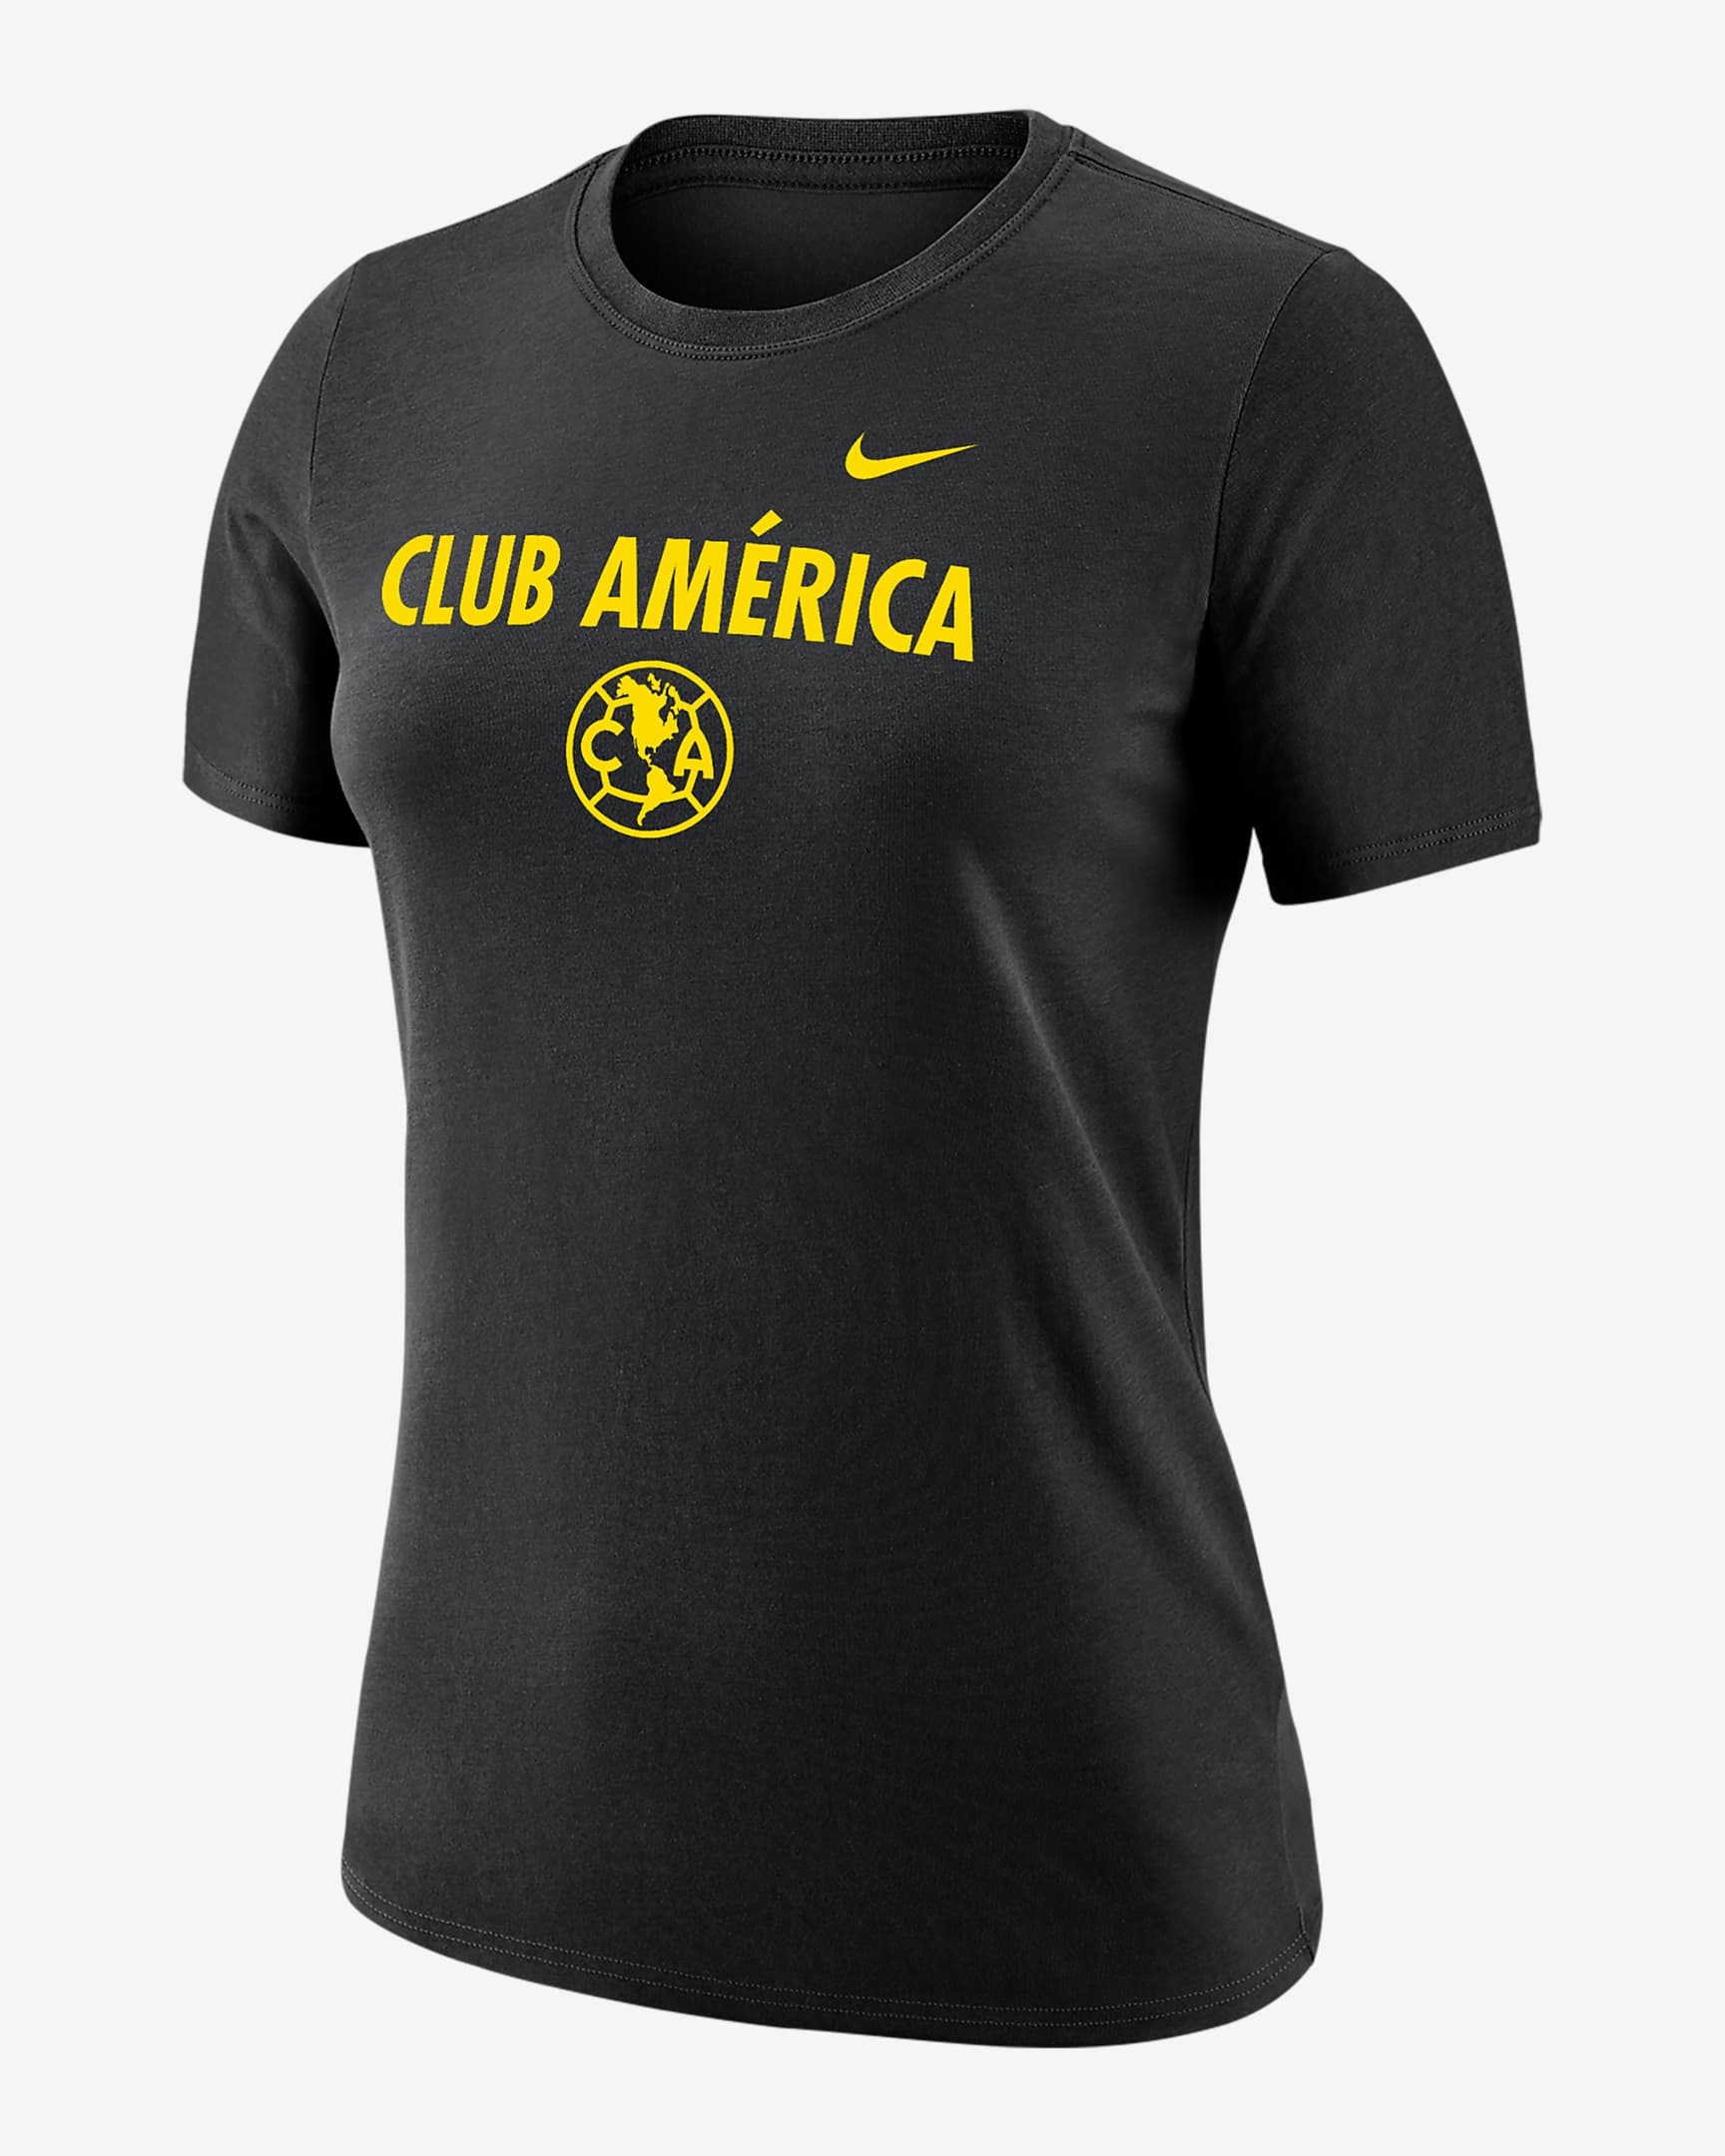 Club América Women's Nike Soccer T-Shirt. Nike.com